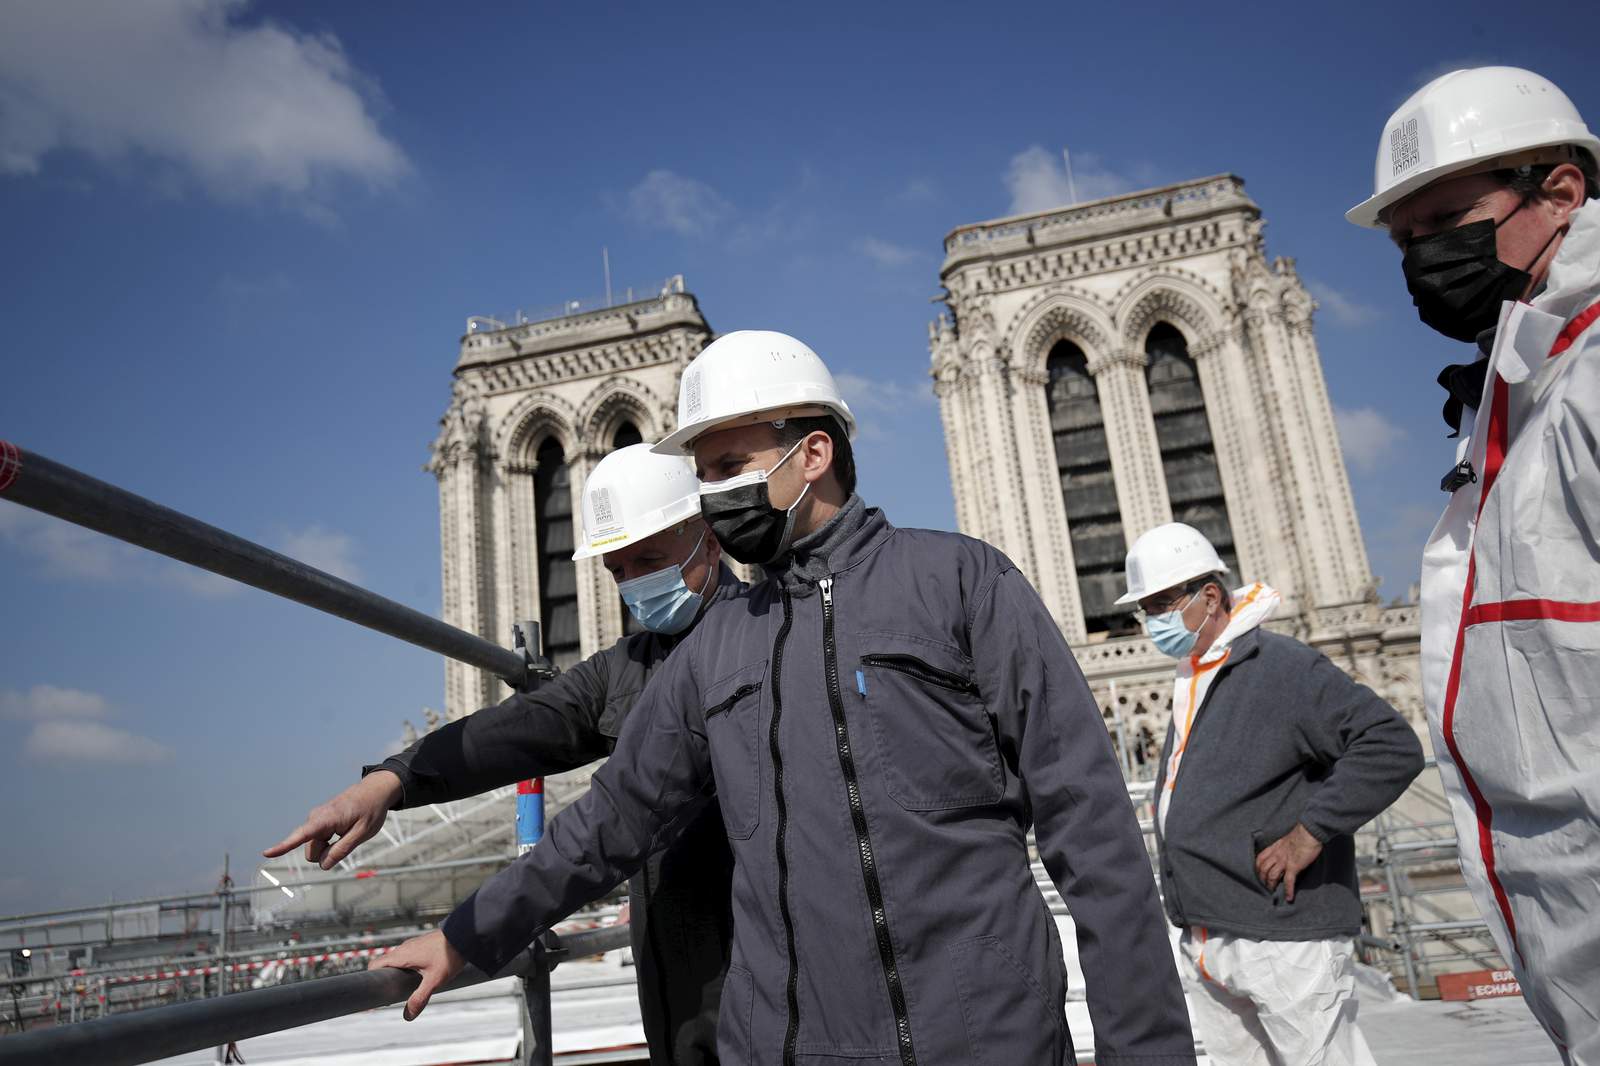 Macron visits Notre Dame 2 years after devastating fire